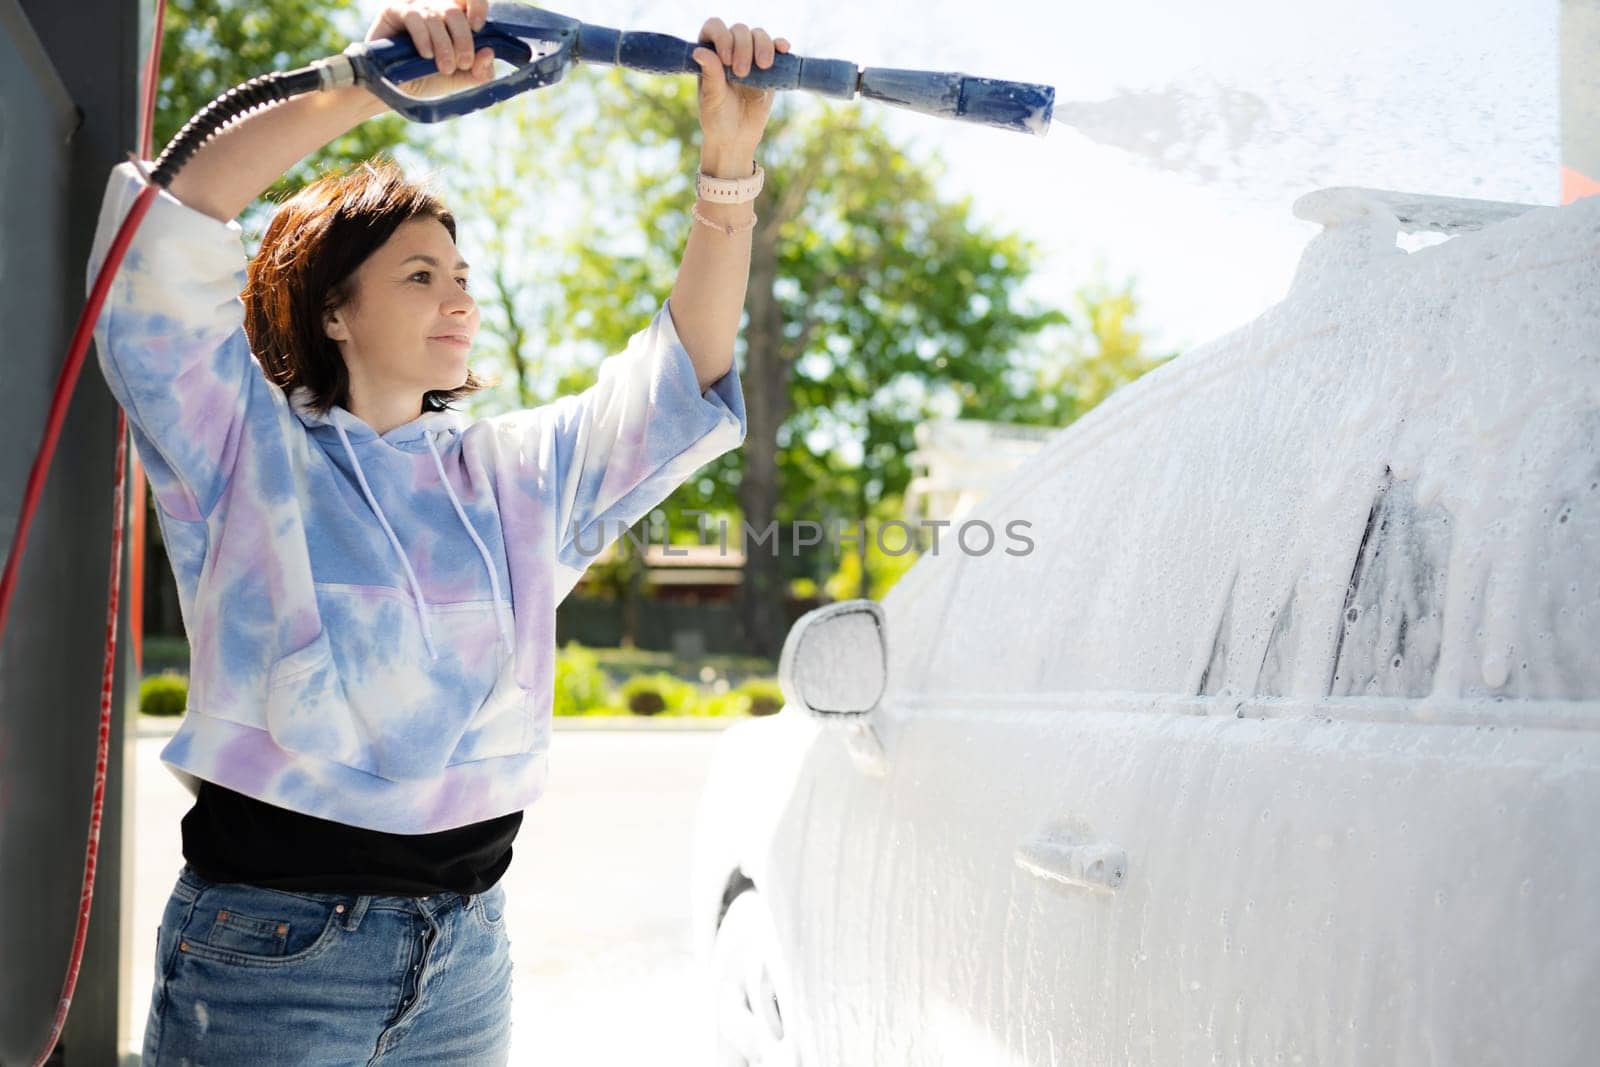 Girl washing a car in a self-service car wash station by GekaSkr